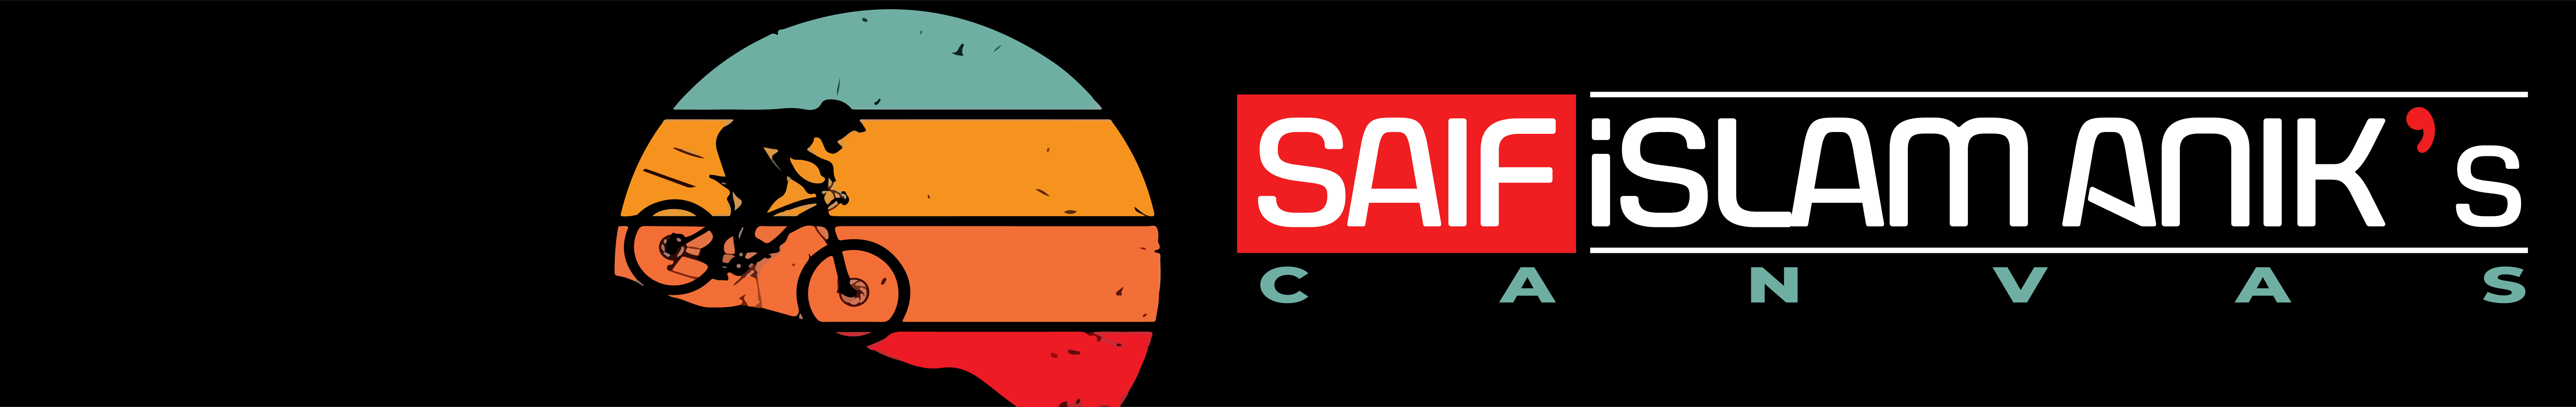 Saif Islam Anik's profile banner